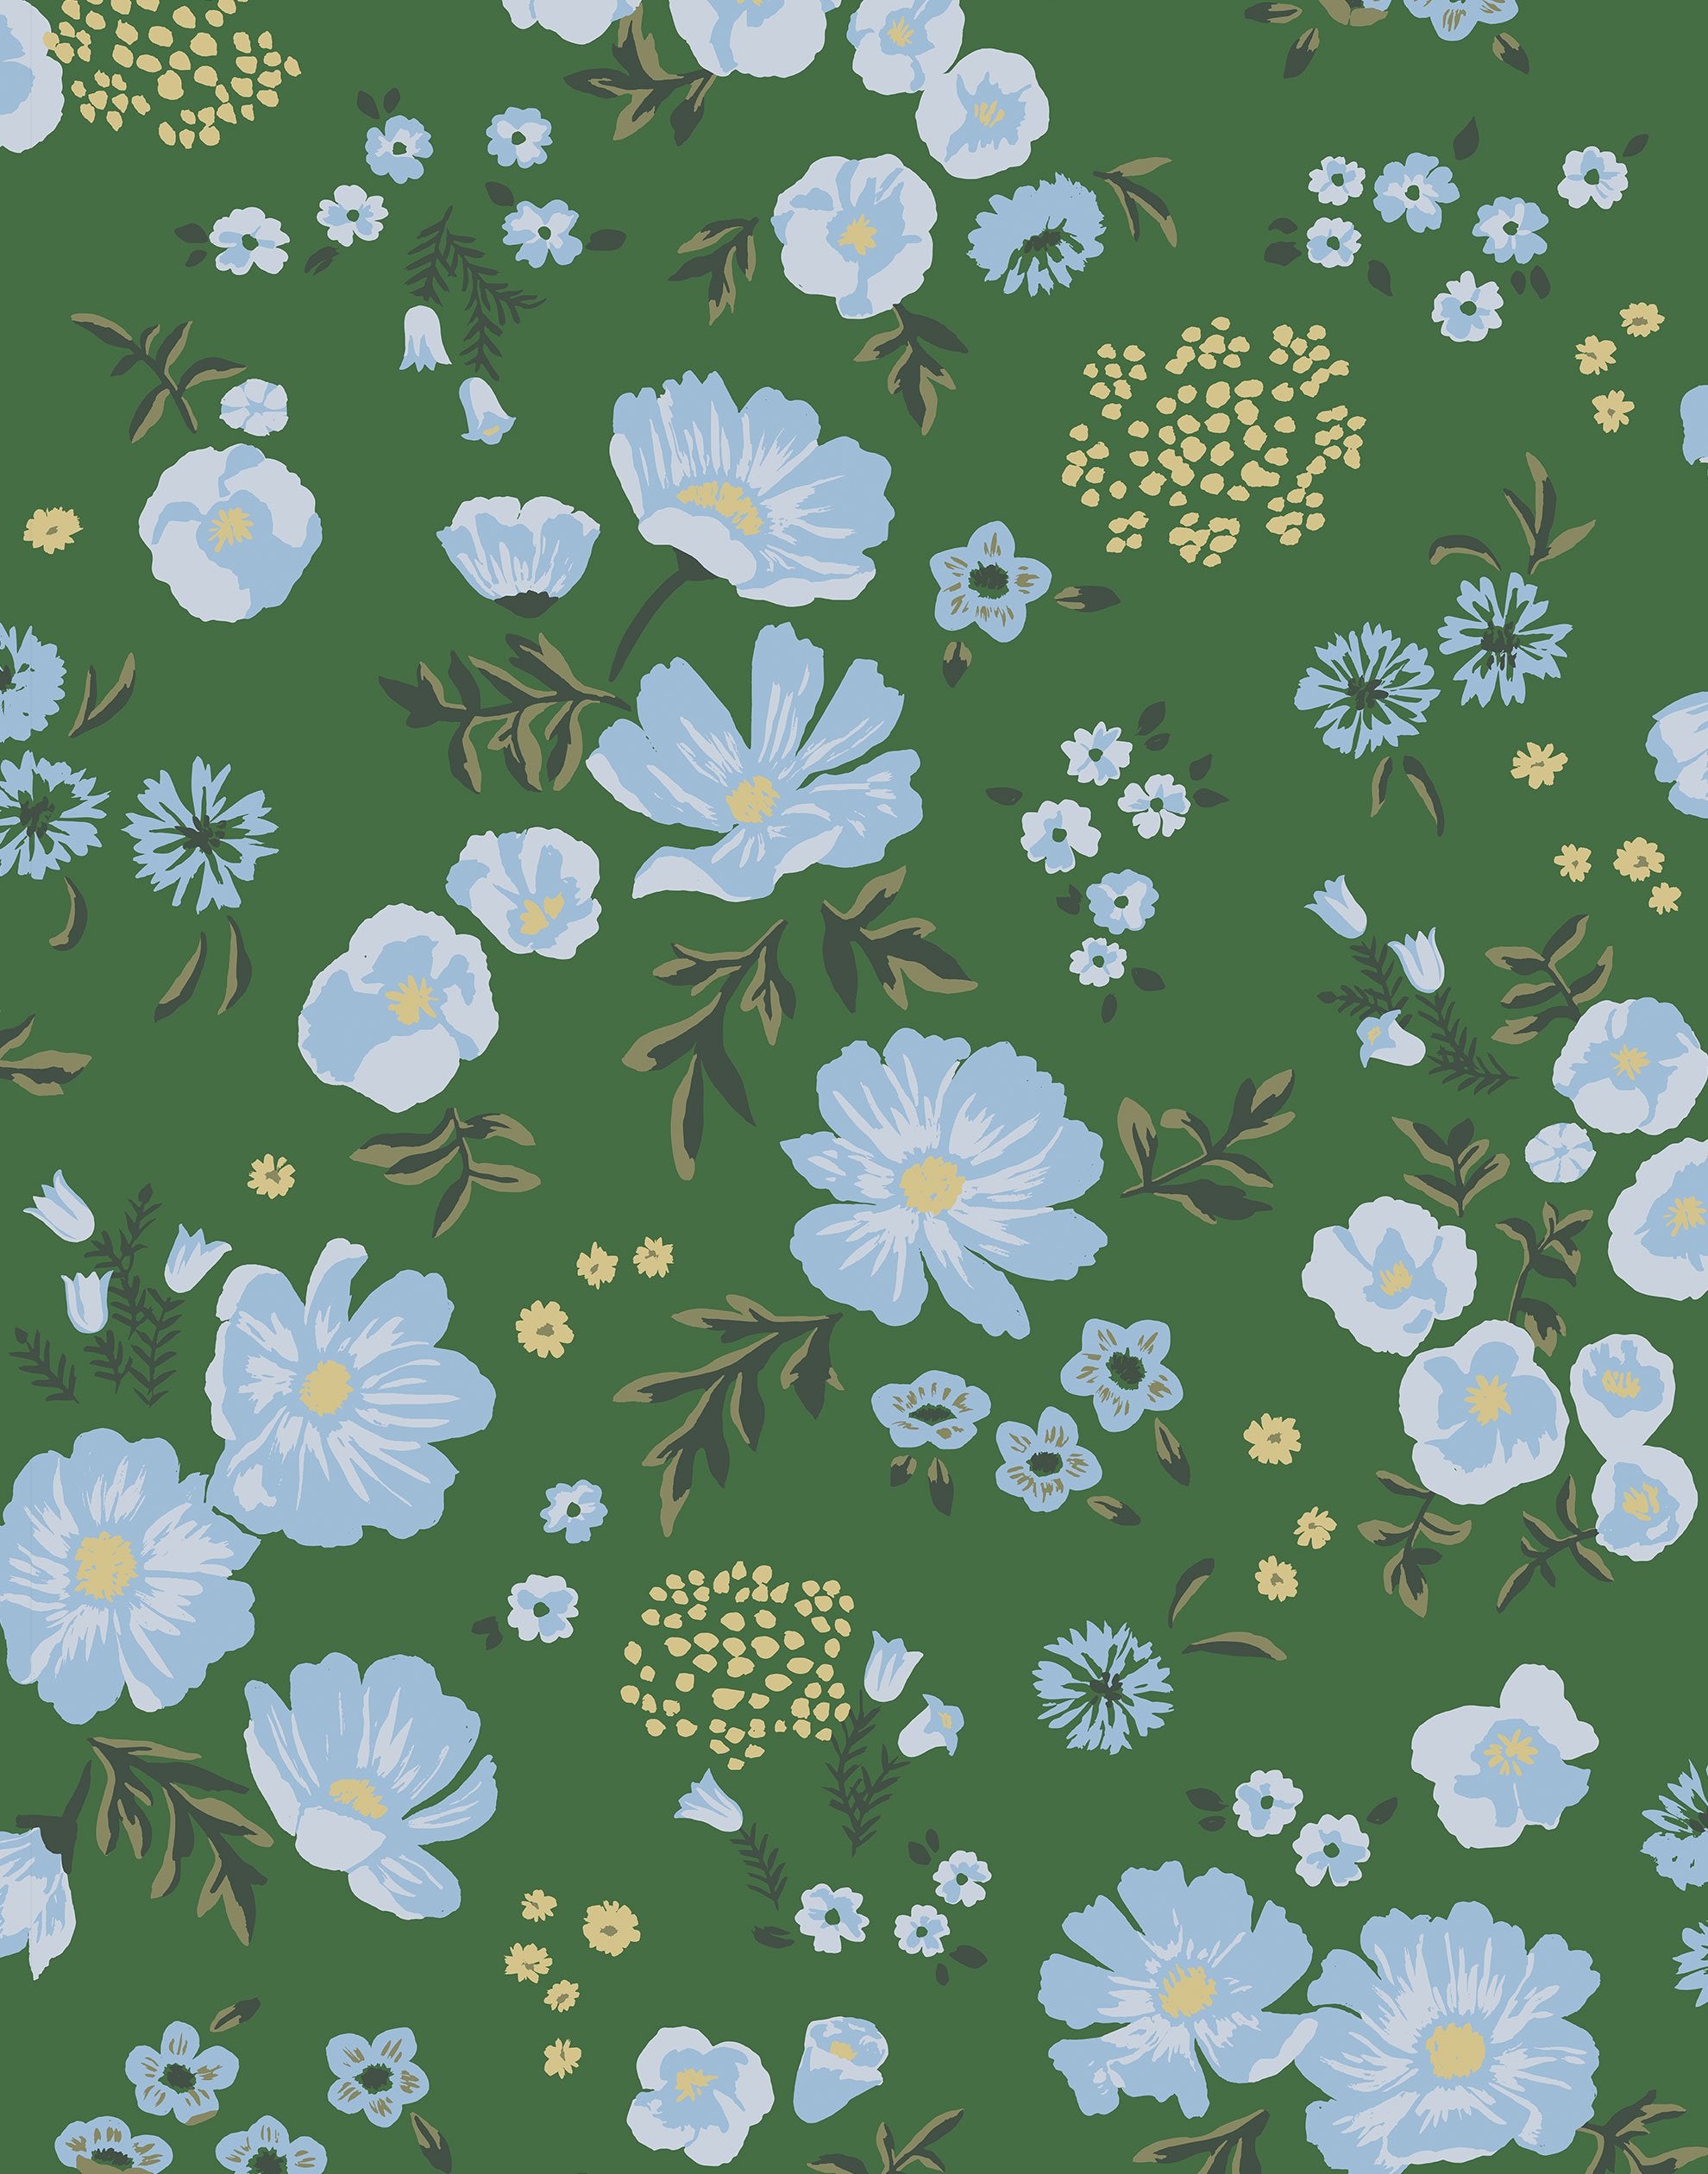 Botanical Seamless Retro Pattern Vintage Floral Wallpaper Green Flowers  Stock Illustration  Download Image Now  iStock